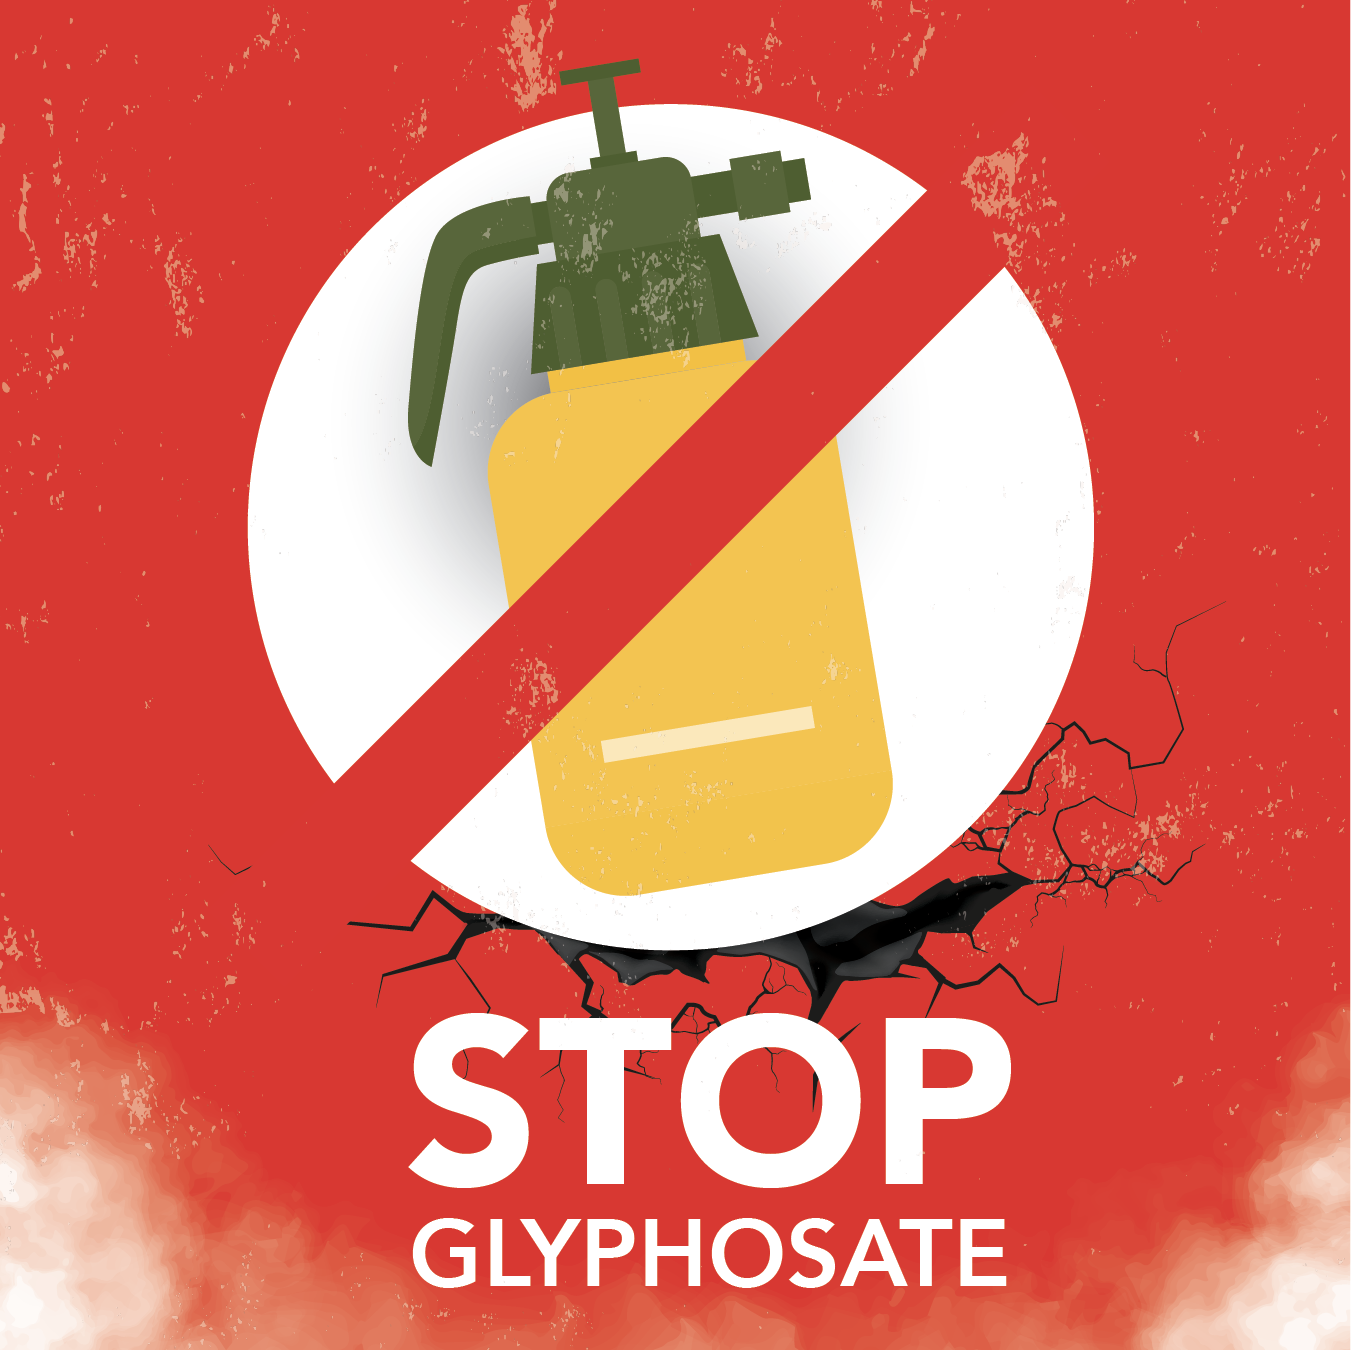 Another Ten Years Of Toxic Glyphosate - EU Disregards Science And Citizens'  Demands.